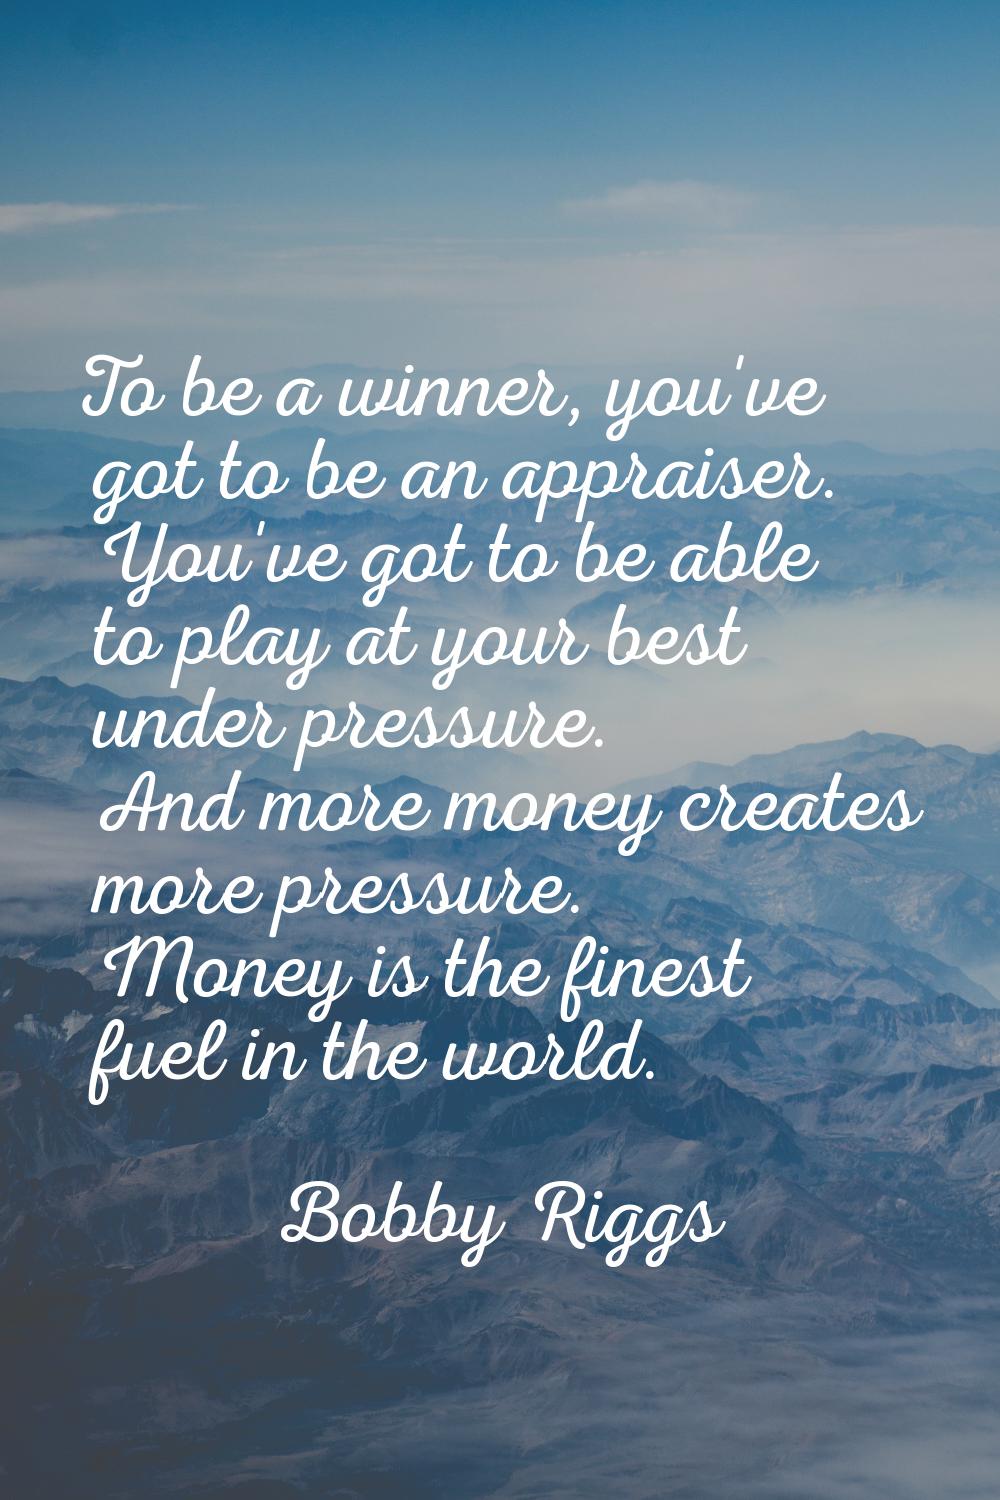 To be a winner, you've got to be an appraiser. You've got to be able to play at your best under pre